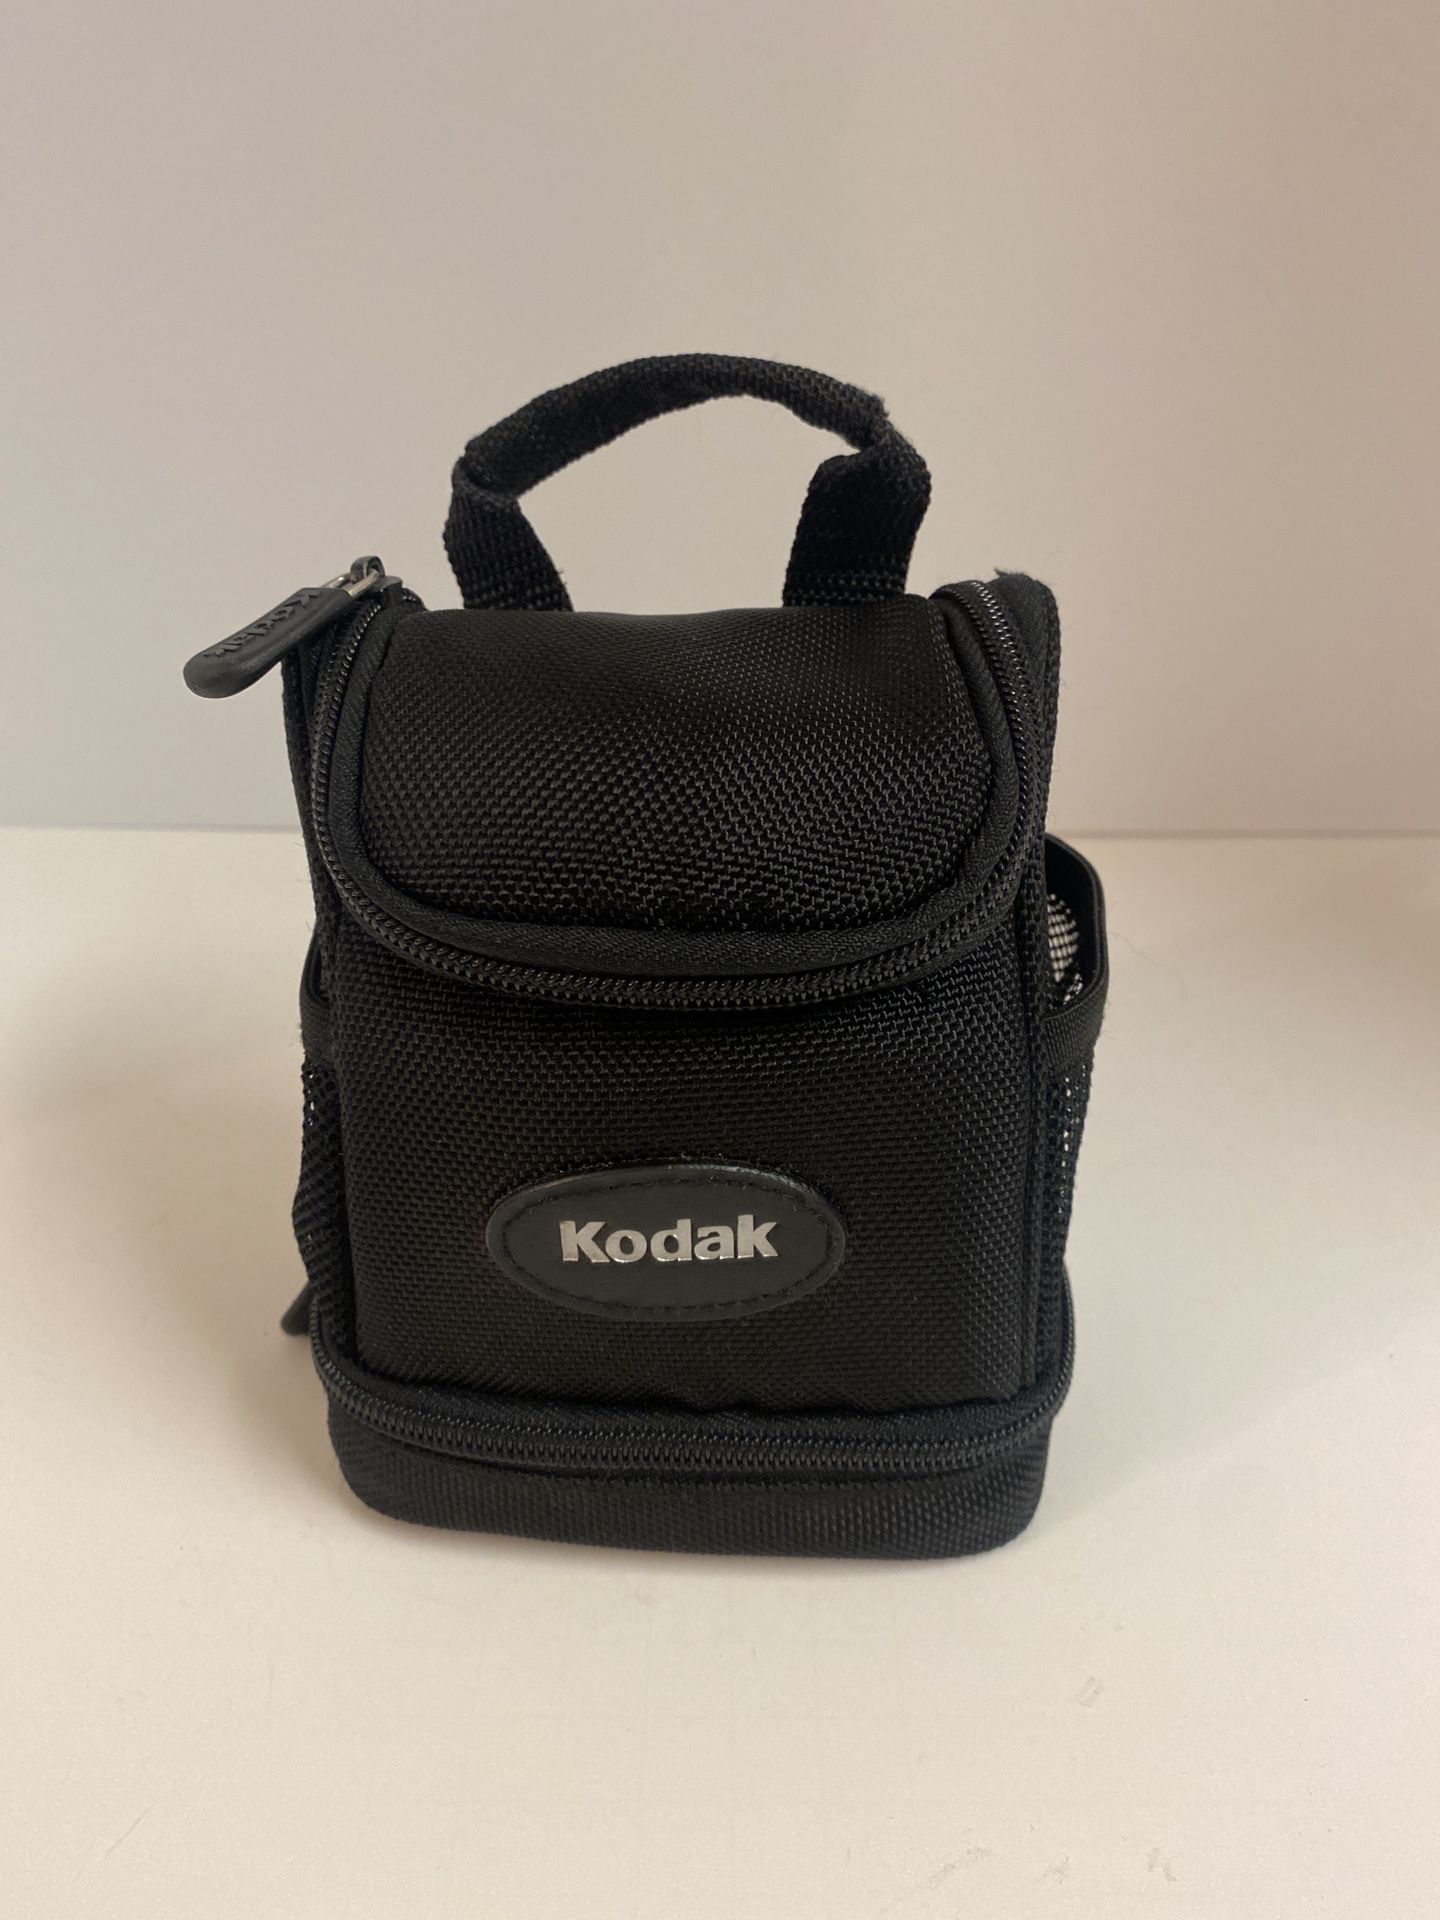 Kodak Dual Compartment Carrying Bag